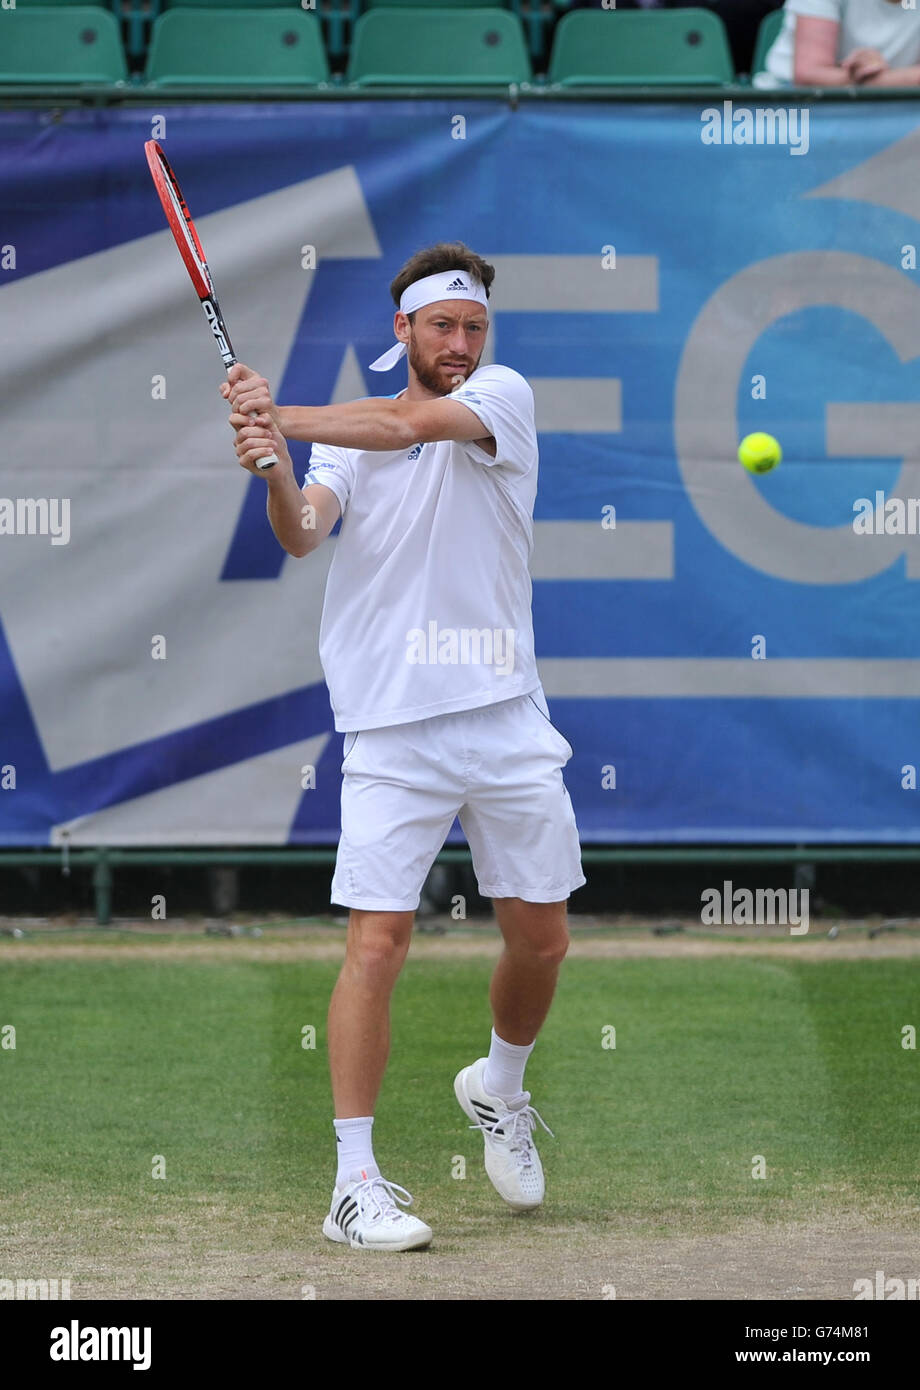 Miloslav Mecir von Slokavia während der AEGON Nottingham Challenge im Nottingham Tennis Center, Nottingham. Stockfoto